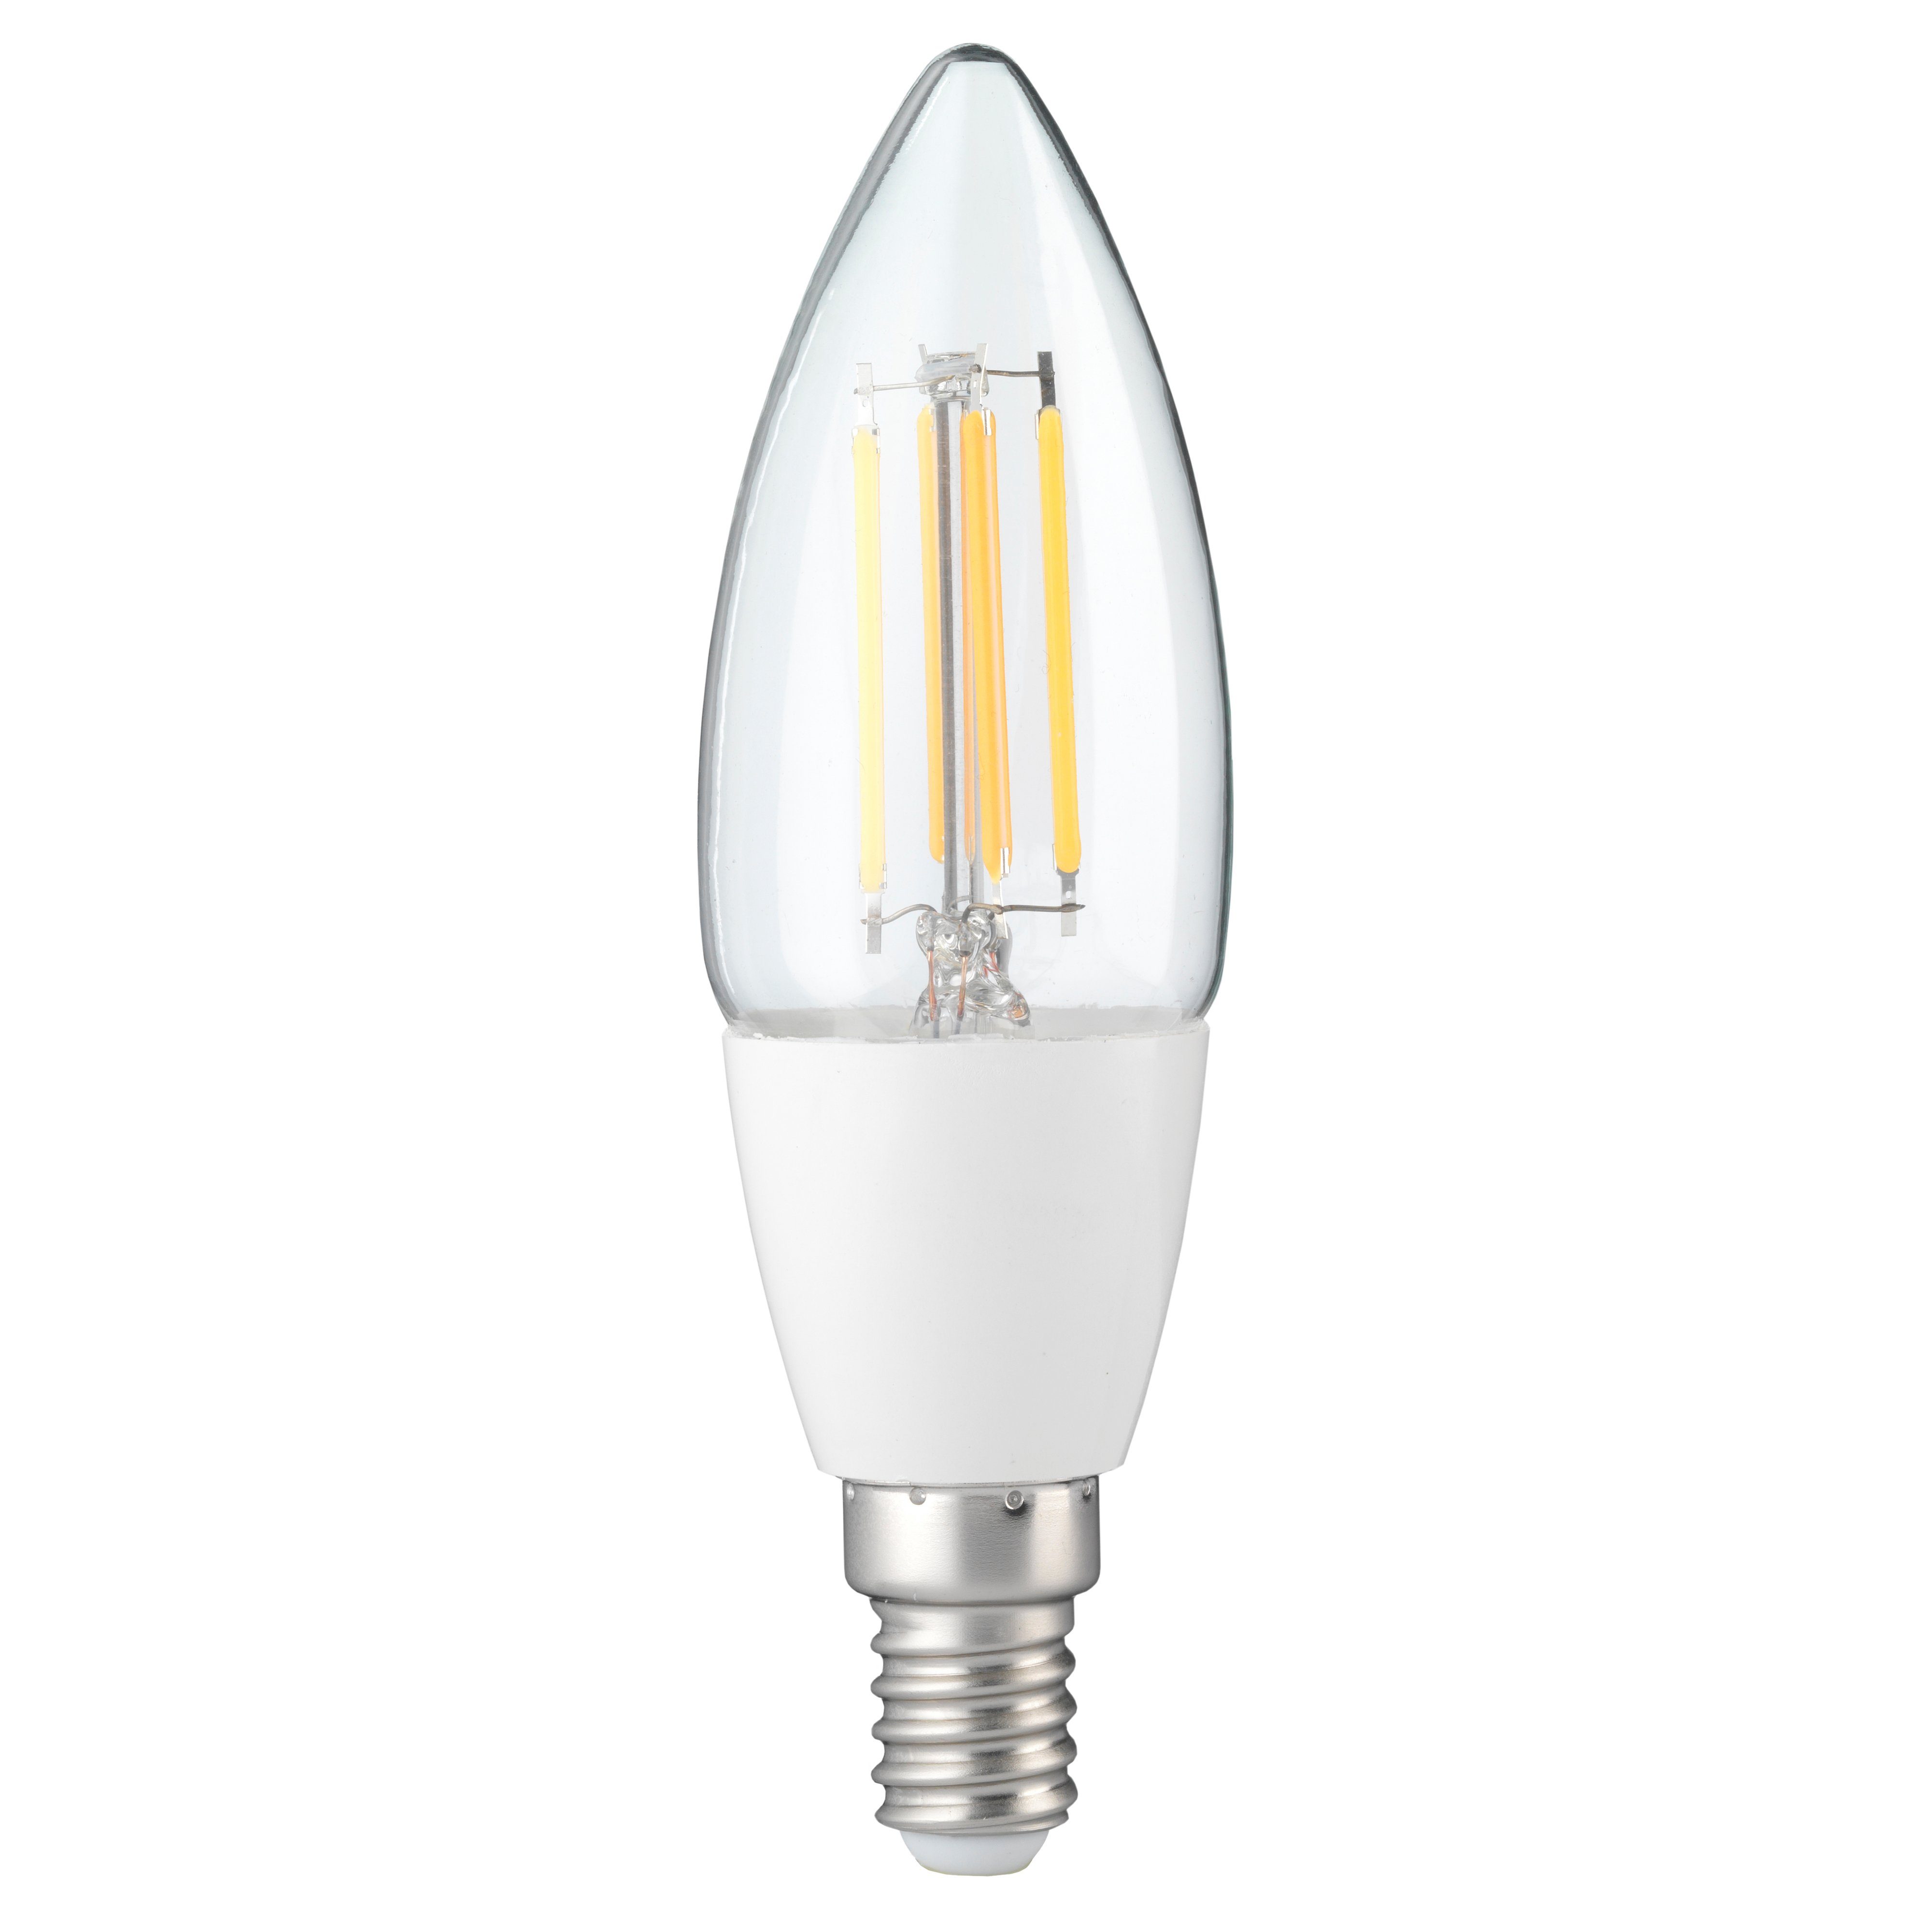 Alecto SMARTLIGHT130 Smarte Lampe